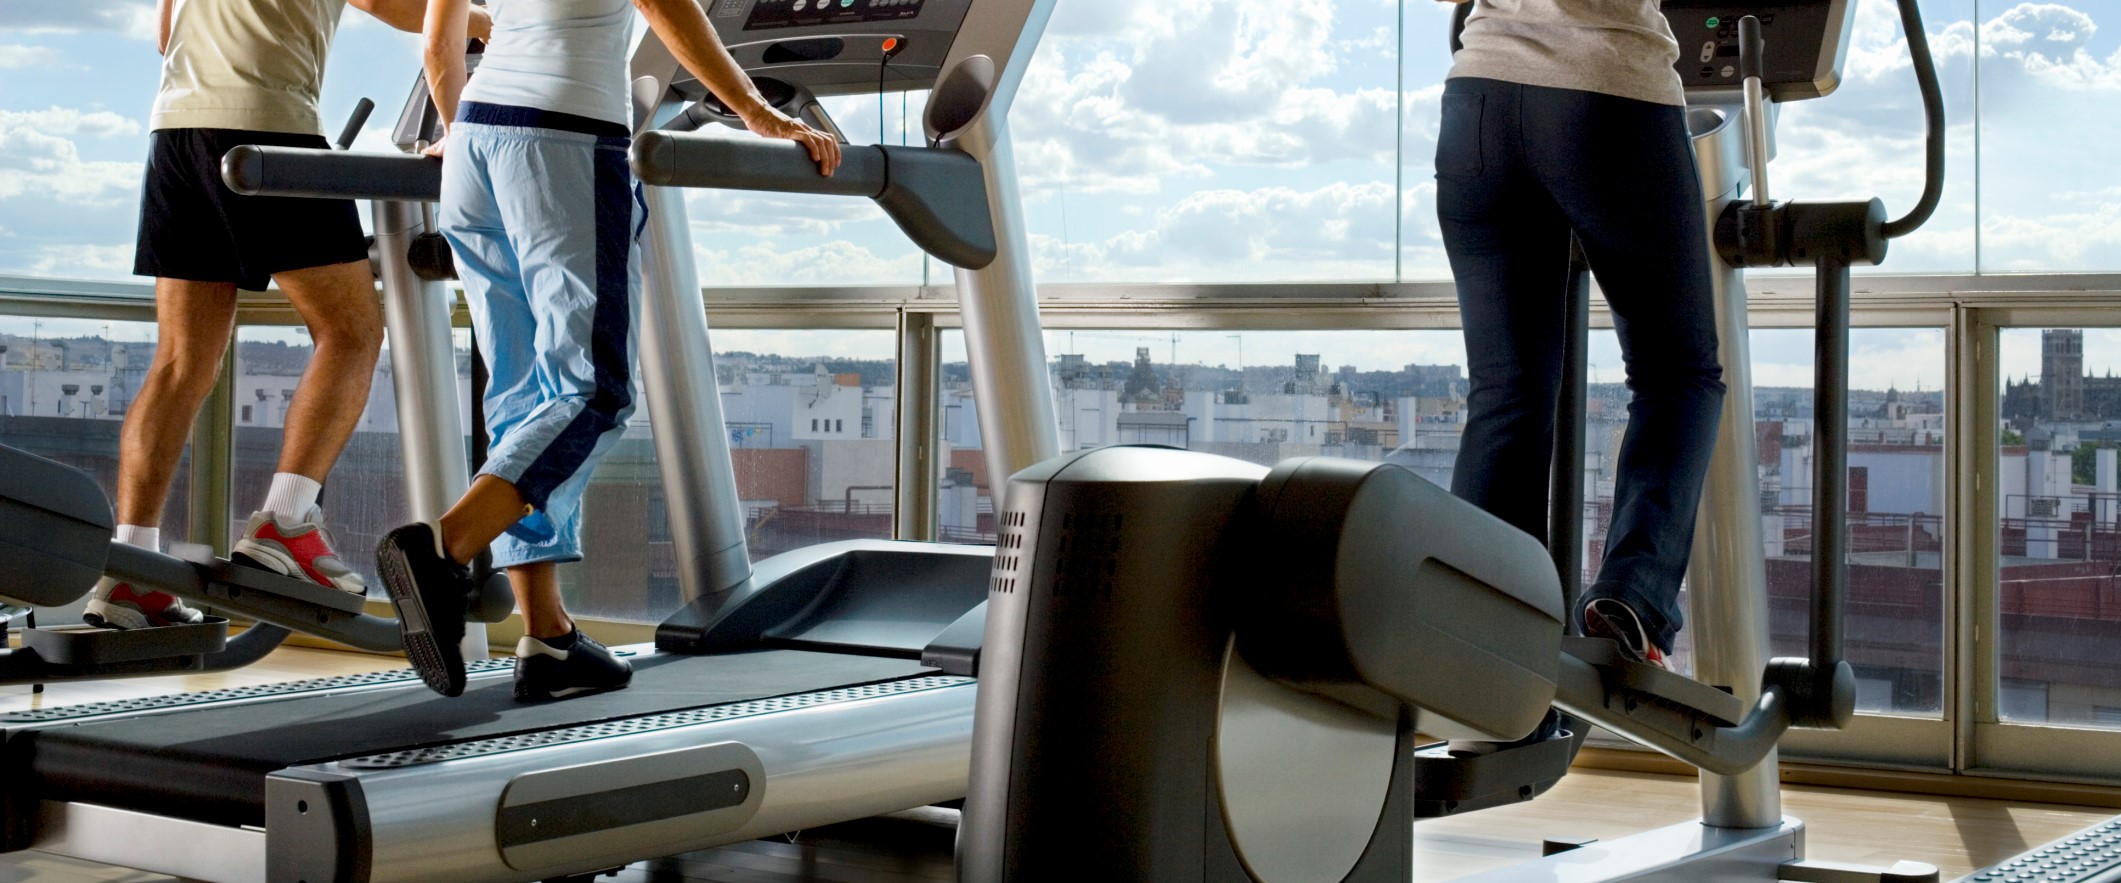 treadmill vs elliptical